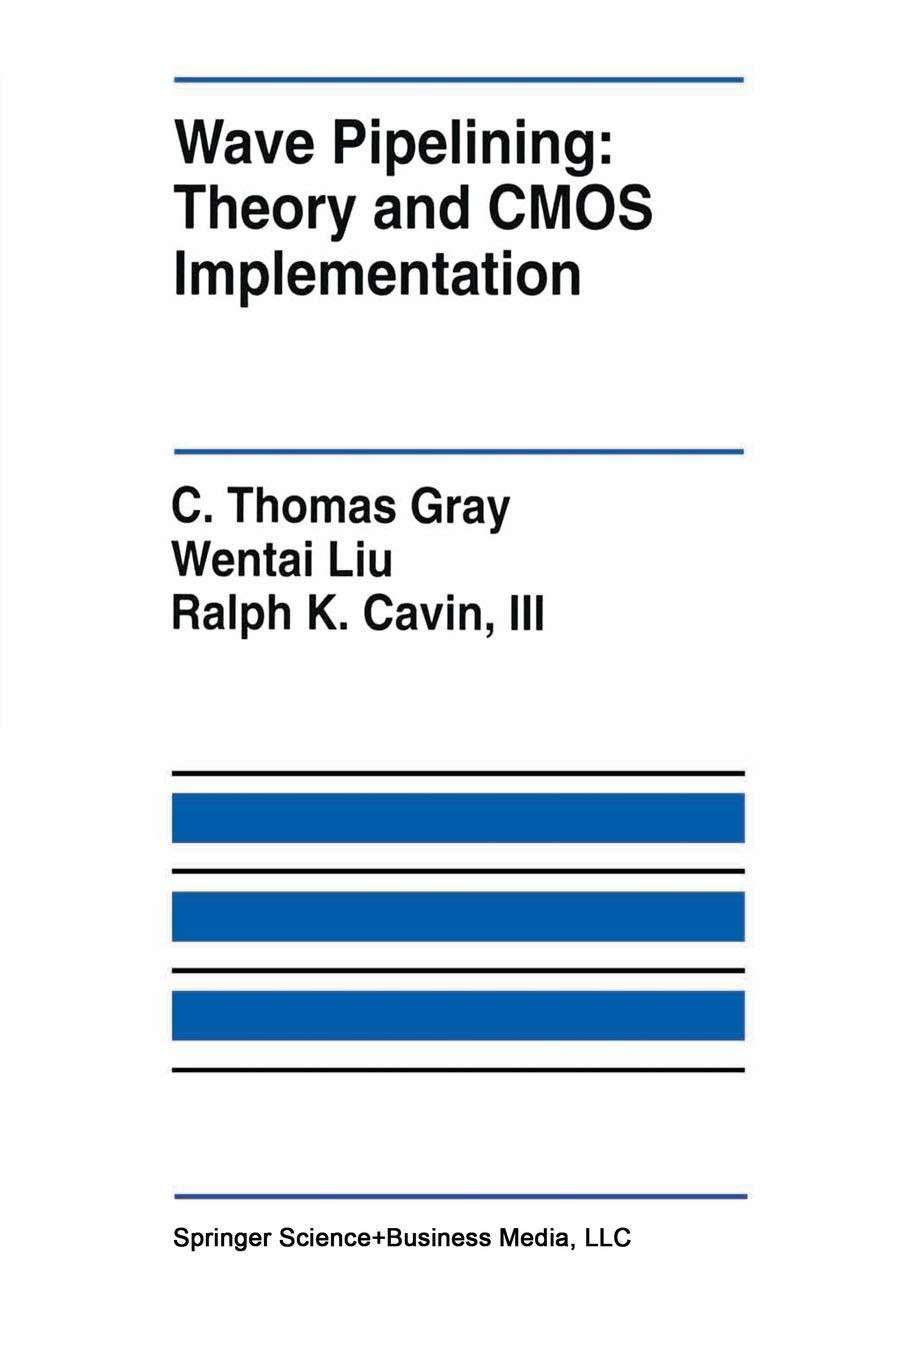 wave pipelining theory and cmos implementation 1994 edition c. thomas gray, wentai liu, ralph k. cavin iii